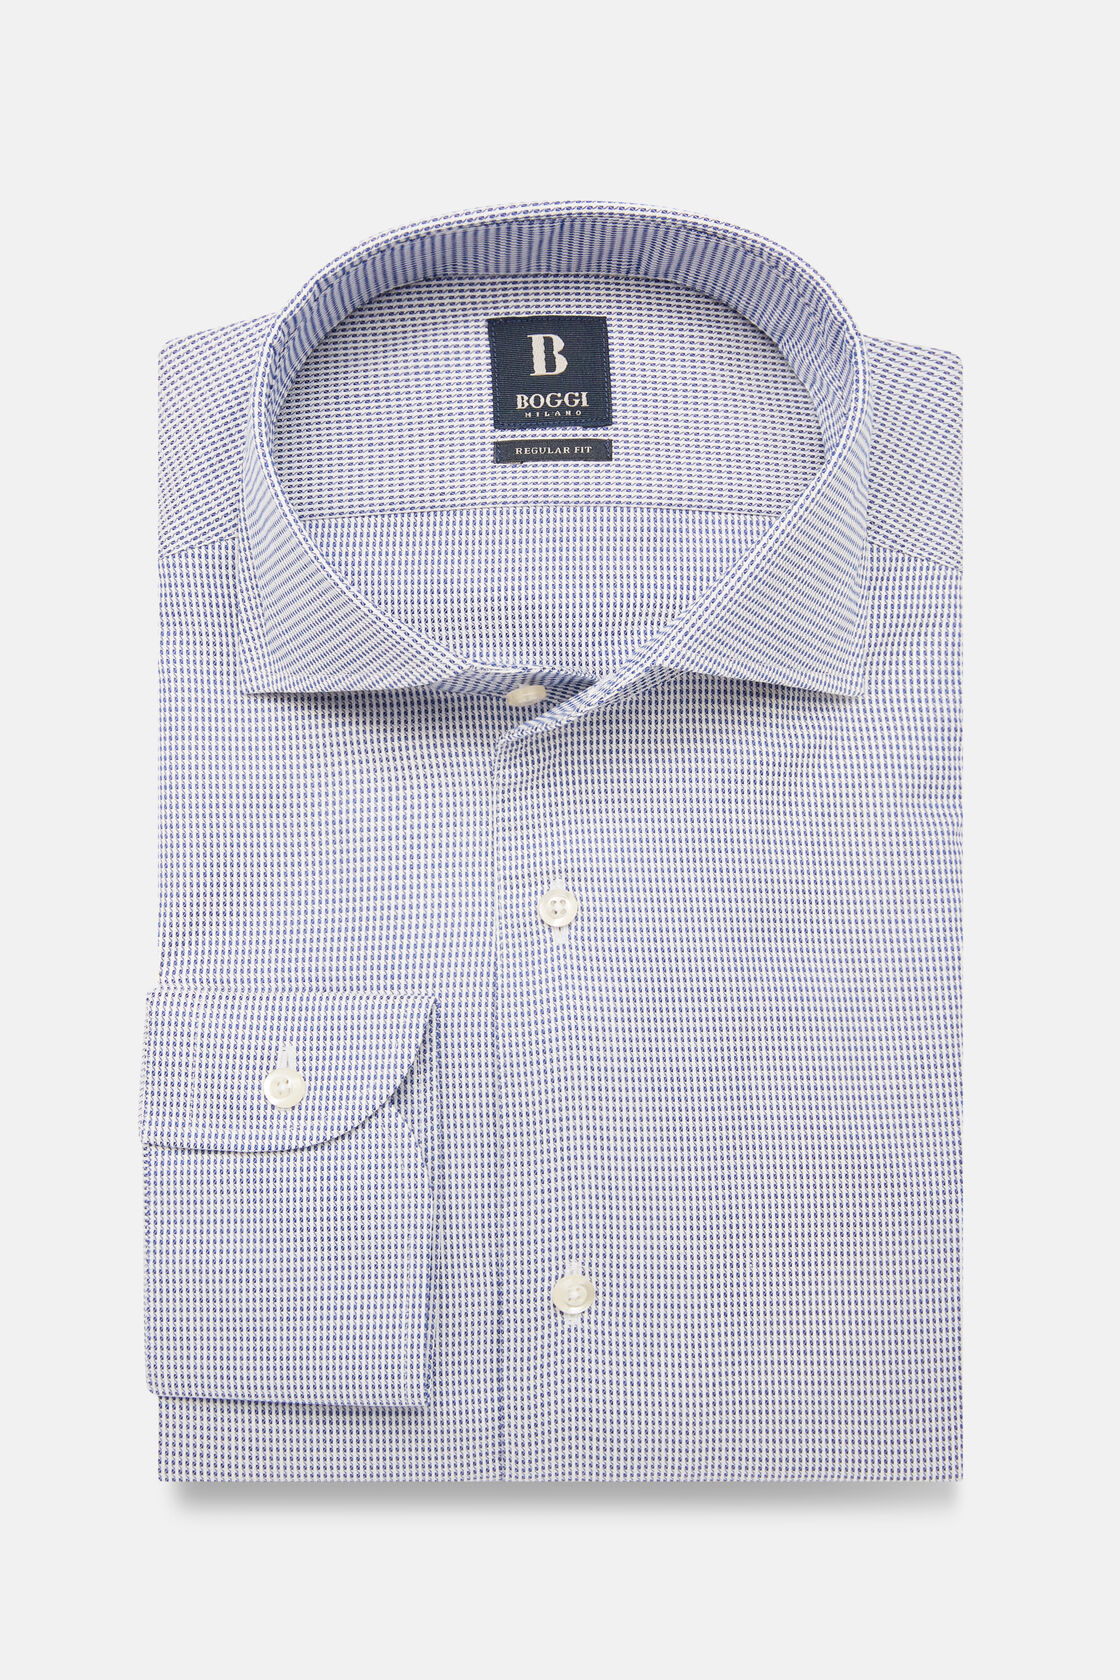 Regular Fit Blue Dobby Cotton Shirt, Royal blue, hi-res